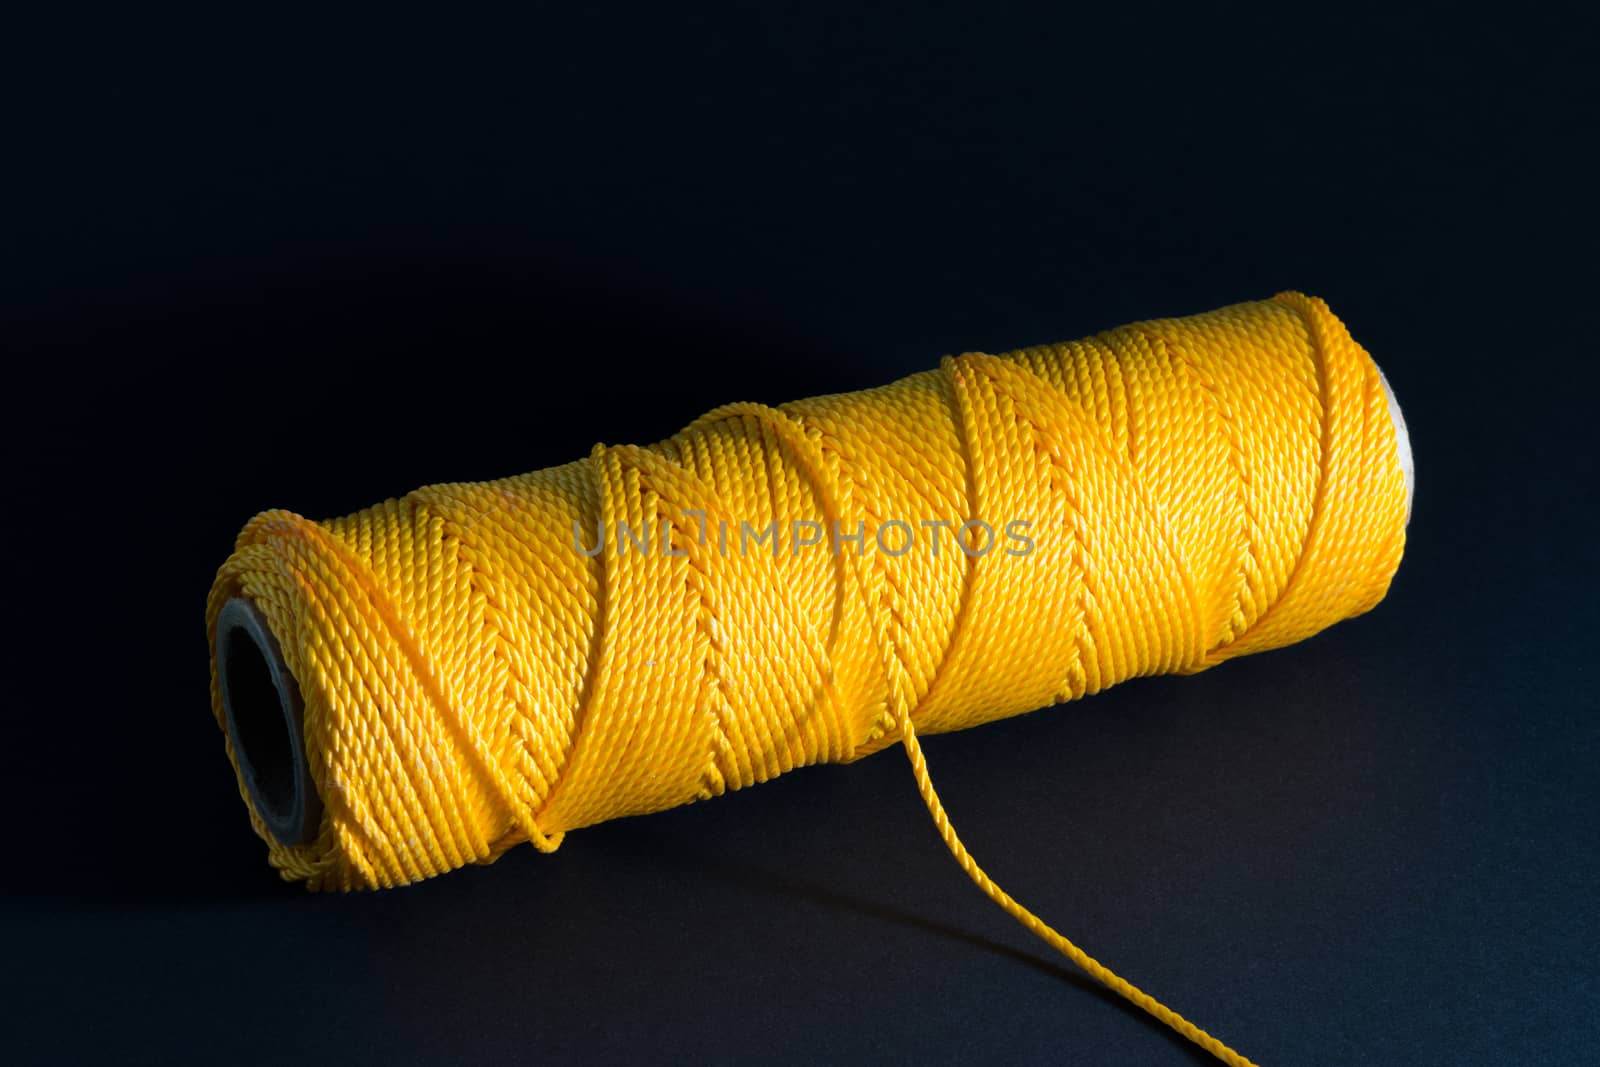 Thread spool with yellow thread by MarkDw